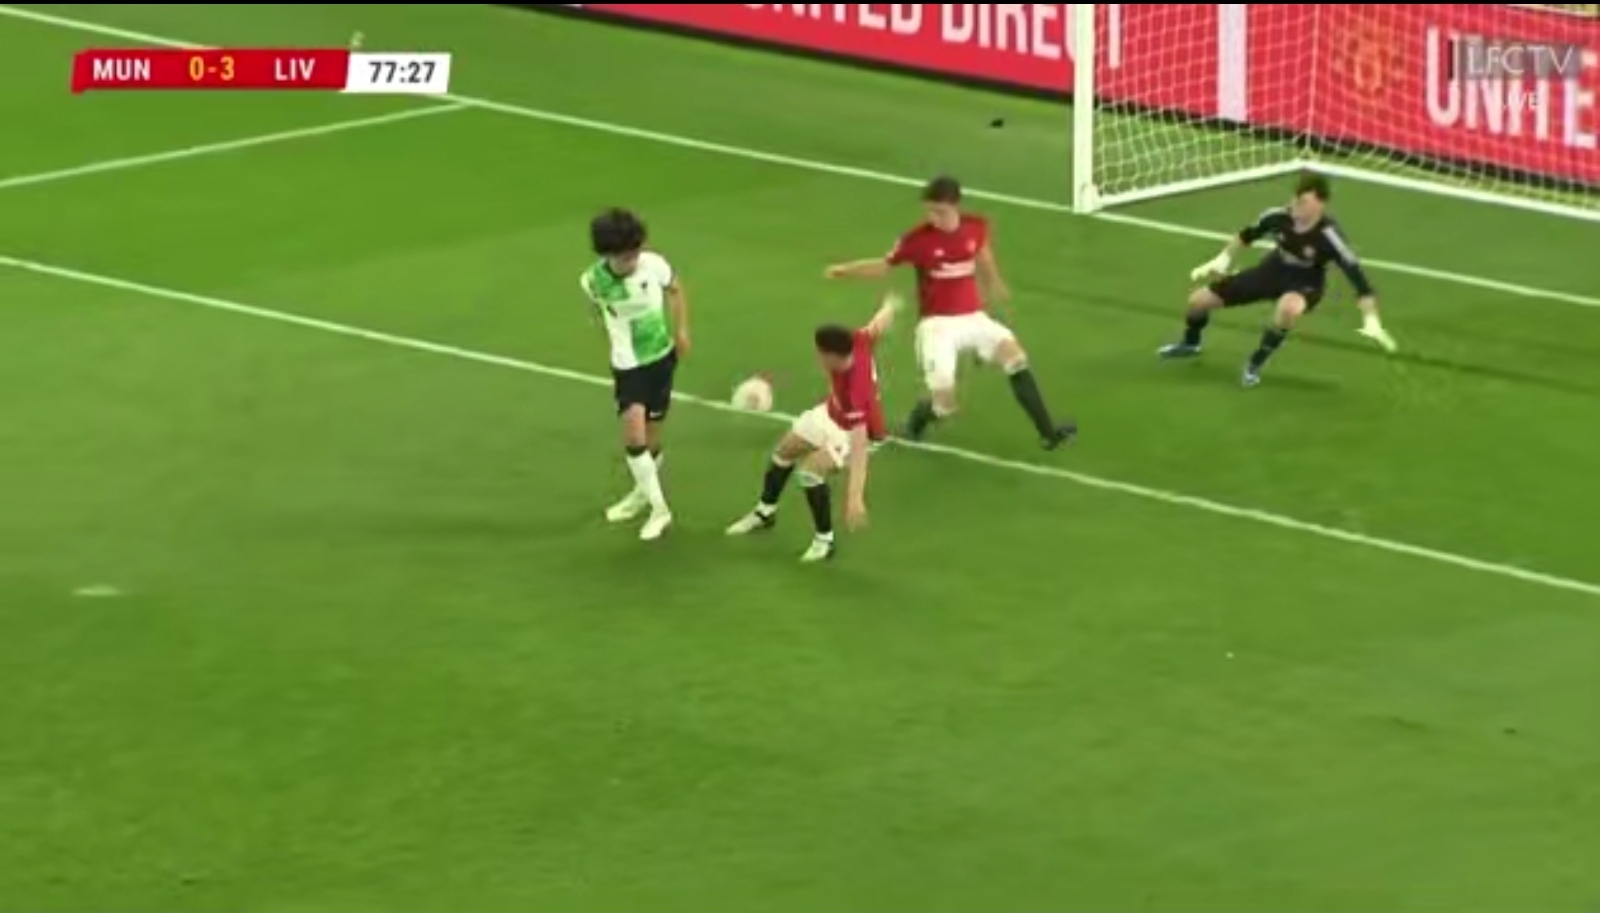 Video: Liverpool sensation Jayden Danns scores outrageous goal for U21’s team against Manchester United